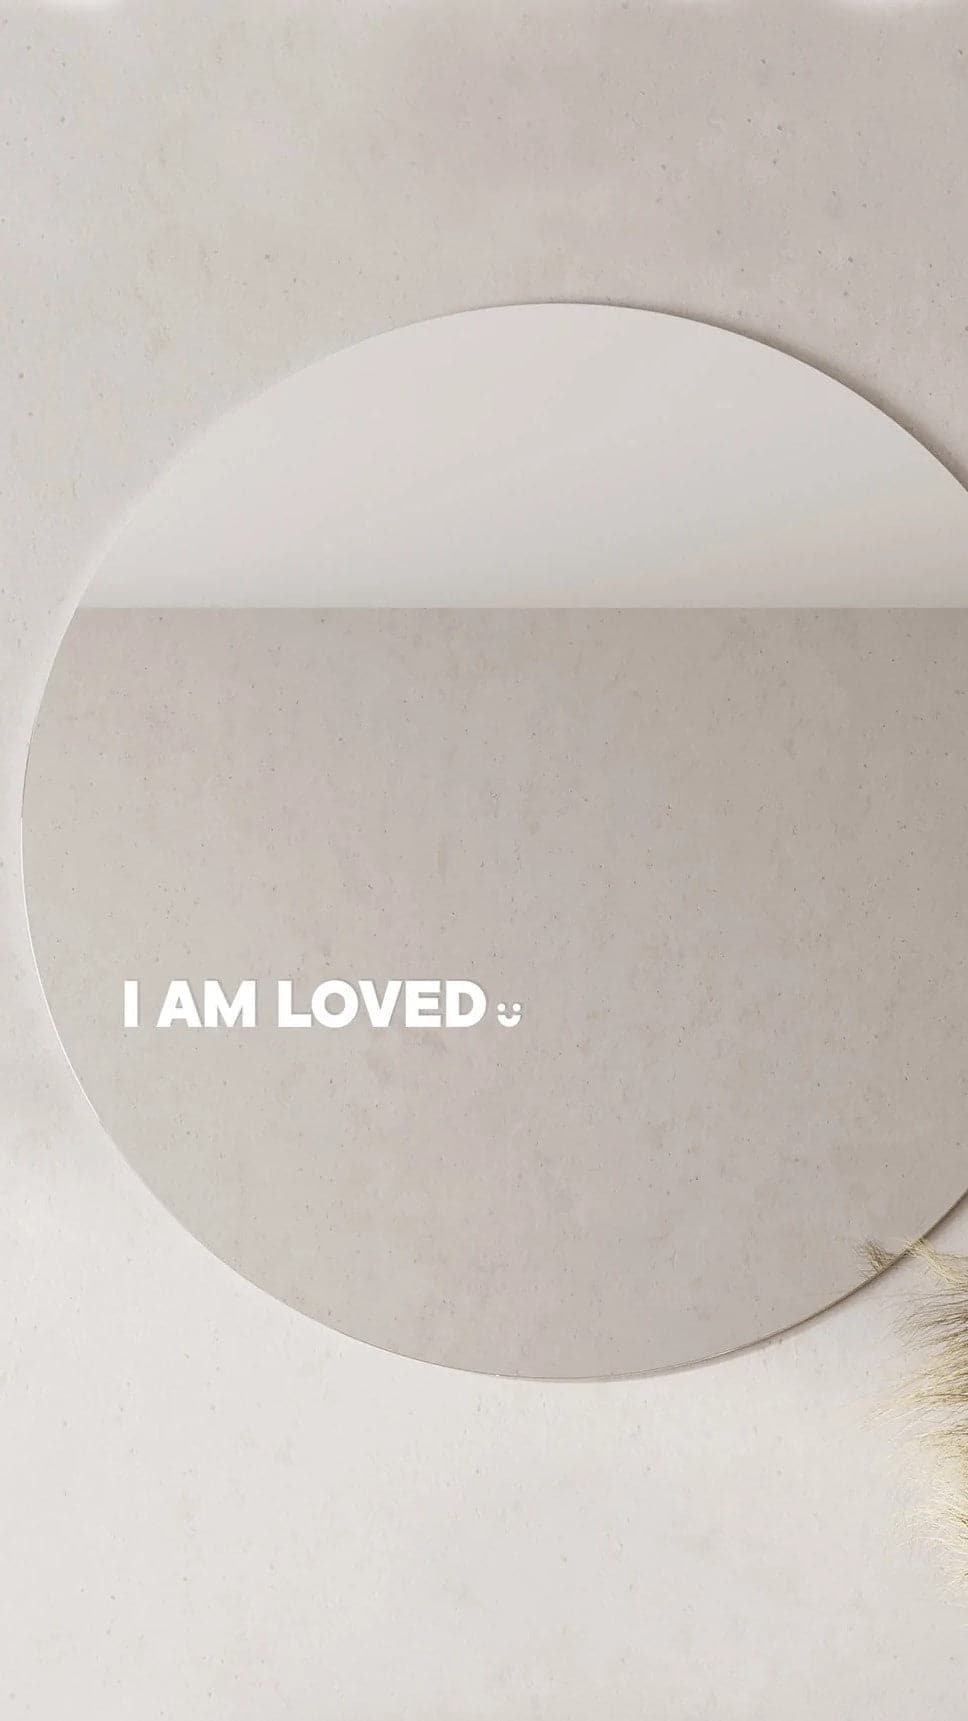 I Am Loved - Affirmation Mirror Sticker - Billy J